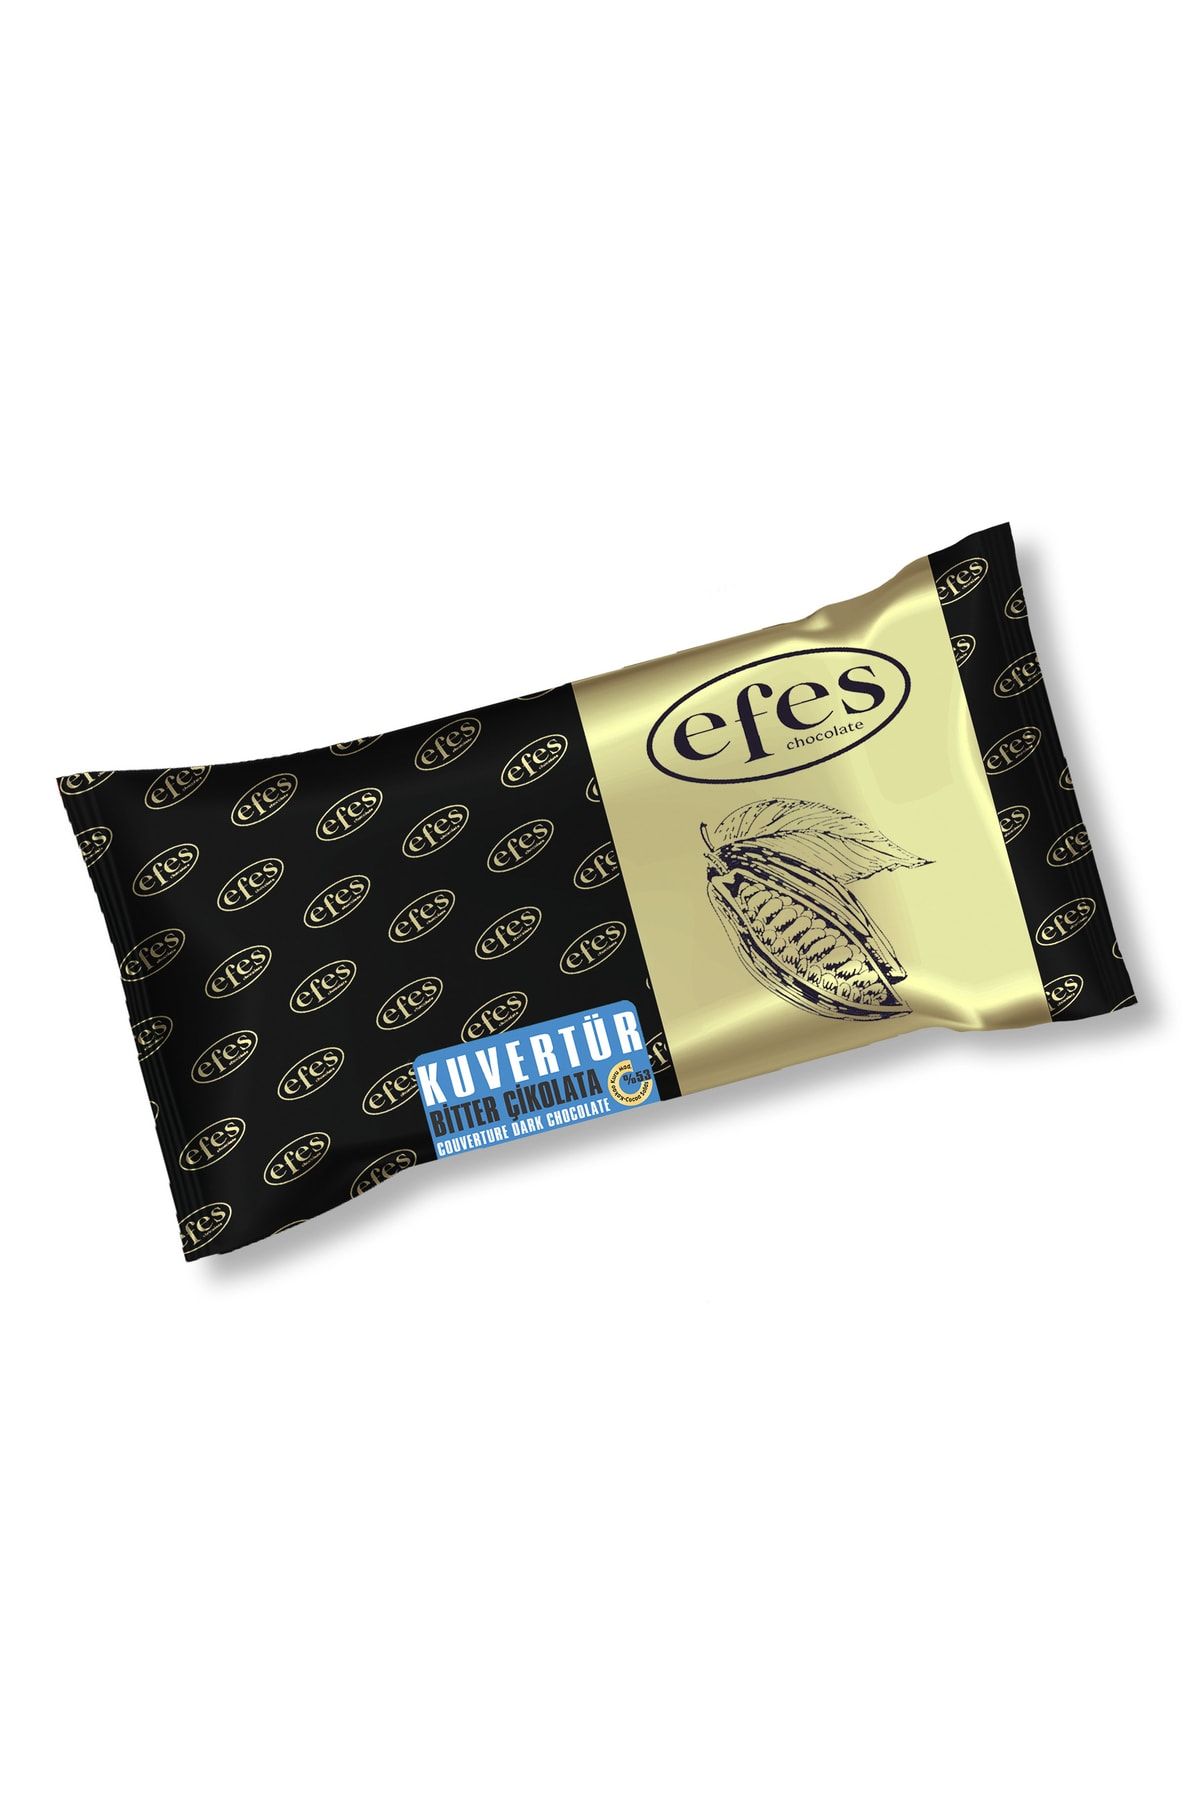 EFES ÇİKOLATA Efes Chocolate Kuvertür Bitter 2,5 Kg.